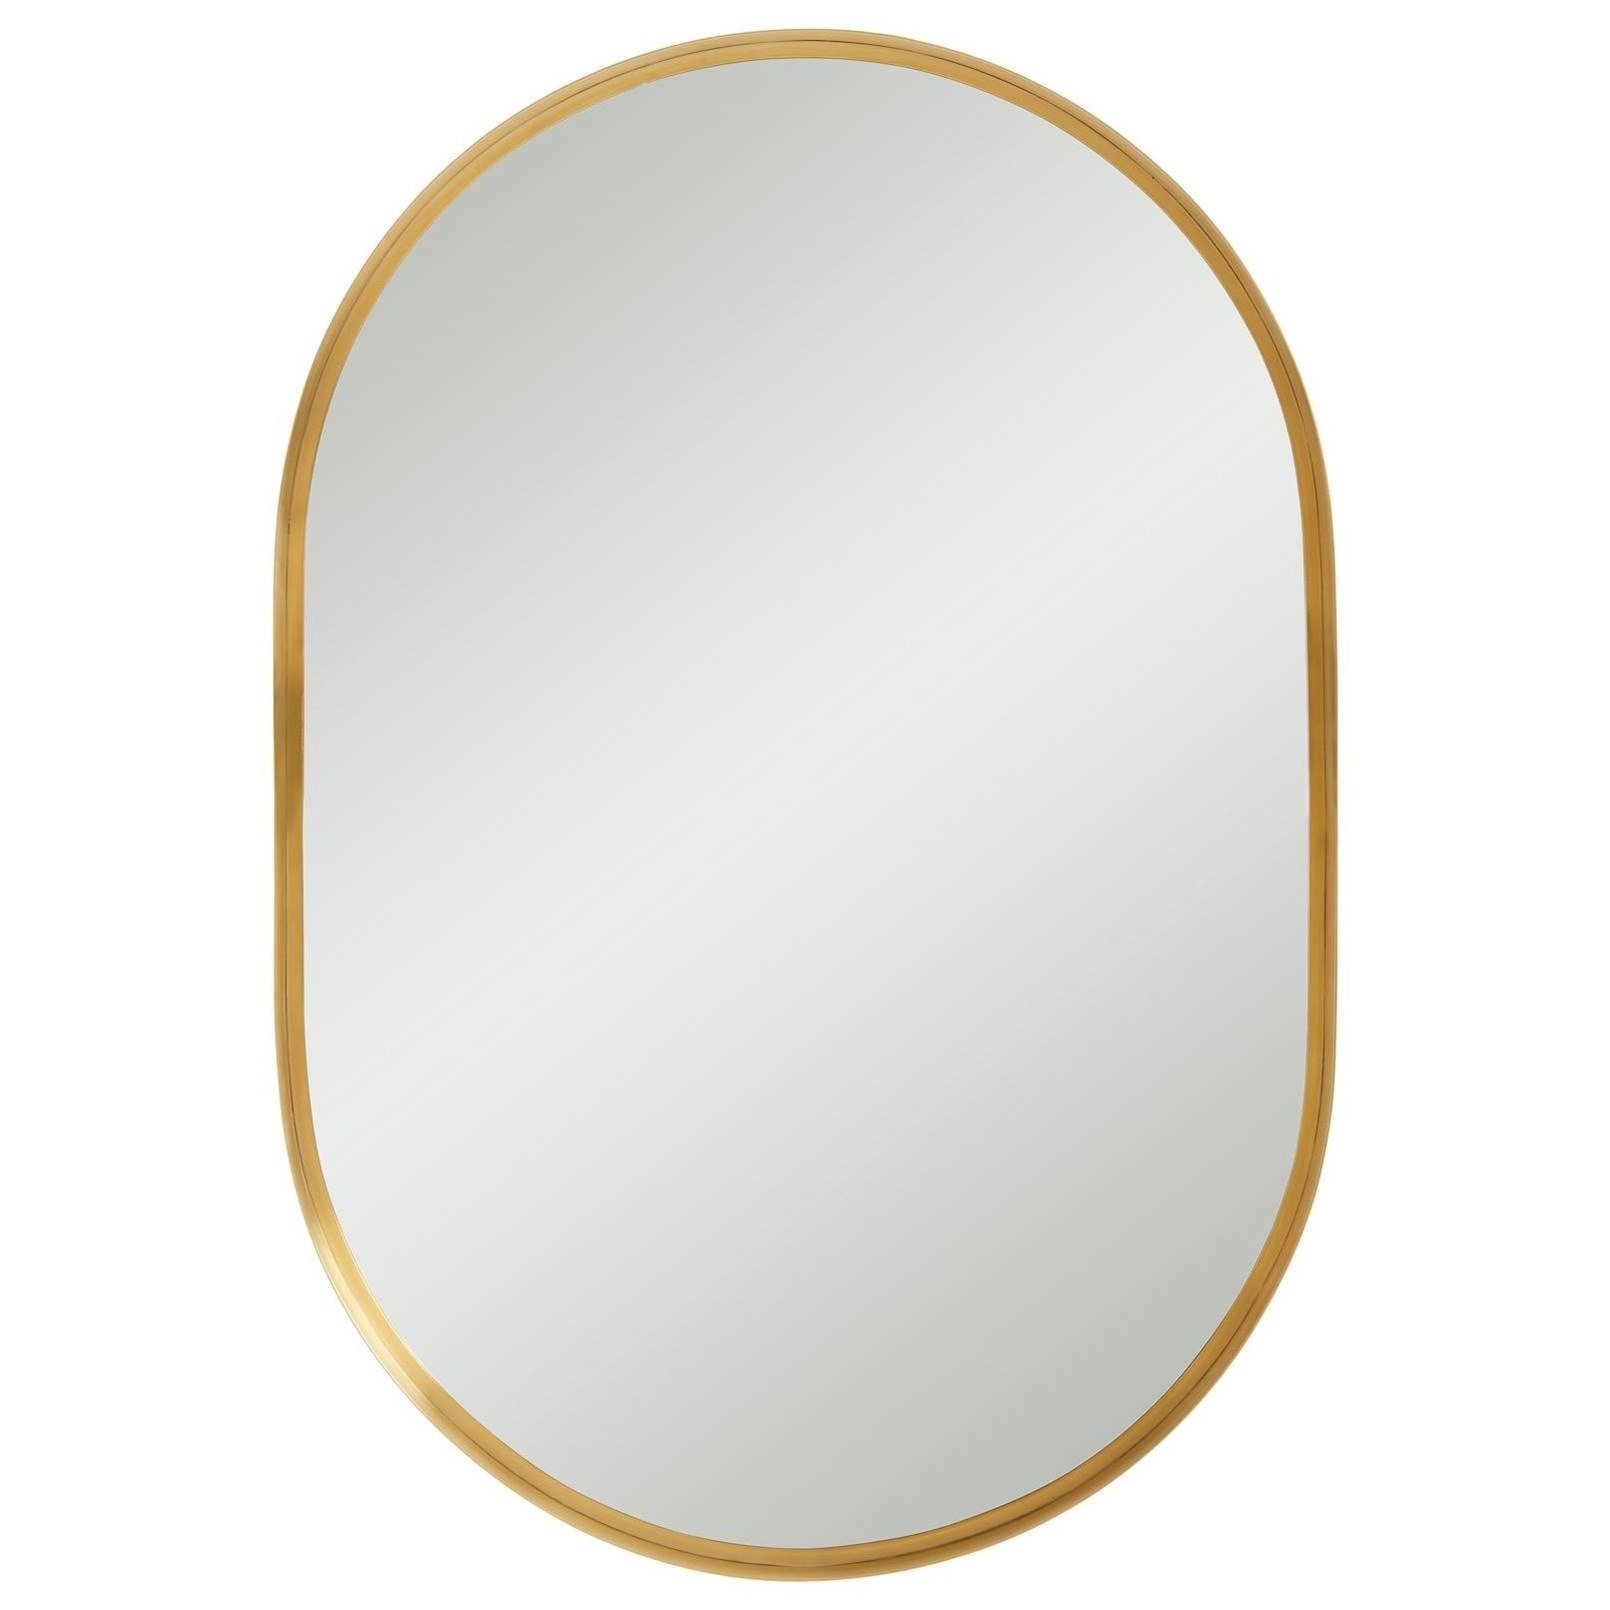 Зеркало настенное недорого. Зеркало LH Mirror Home Леннокс bd-316975. Зеркало Vallessi овальное 110x60см, золото. Зеркало Лувр хоум. Зеркало в золотой раме kfg081.